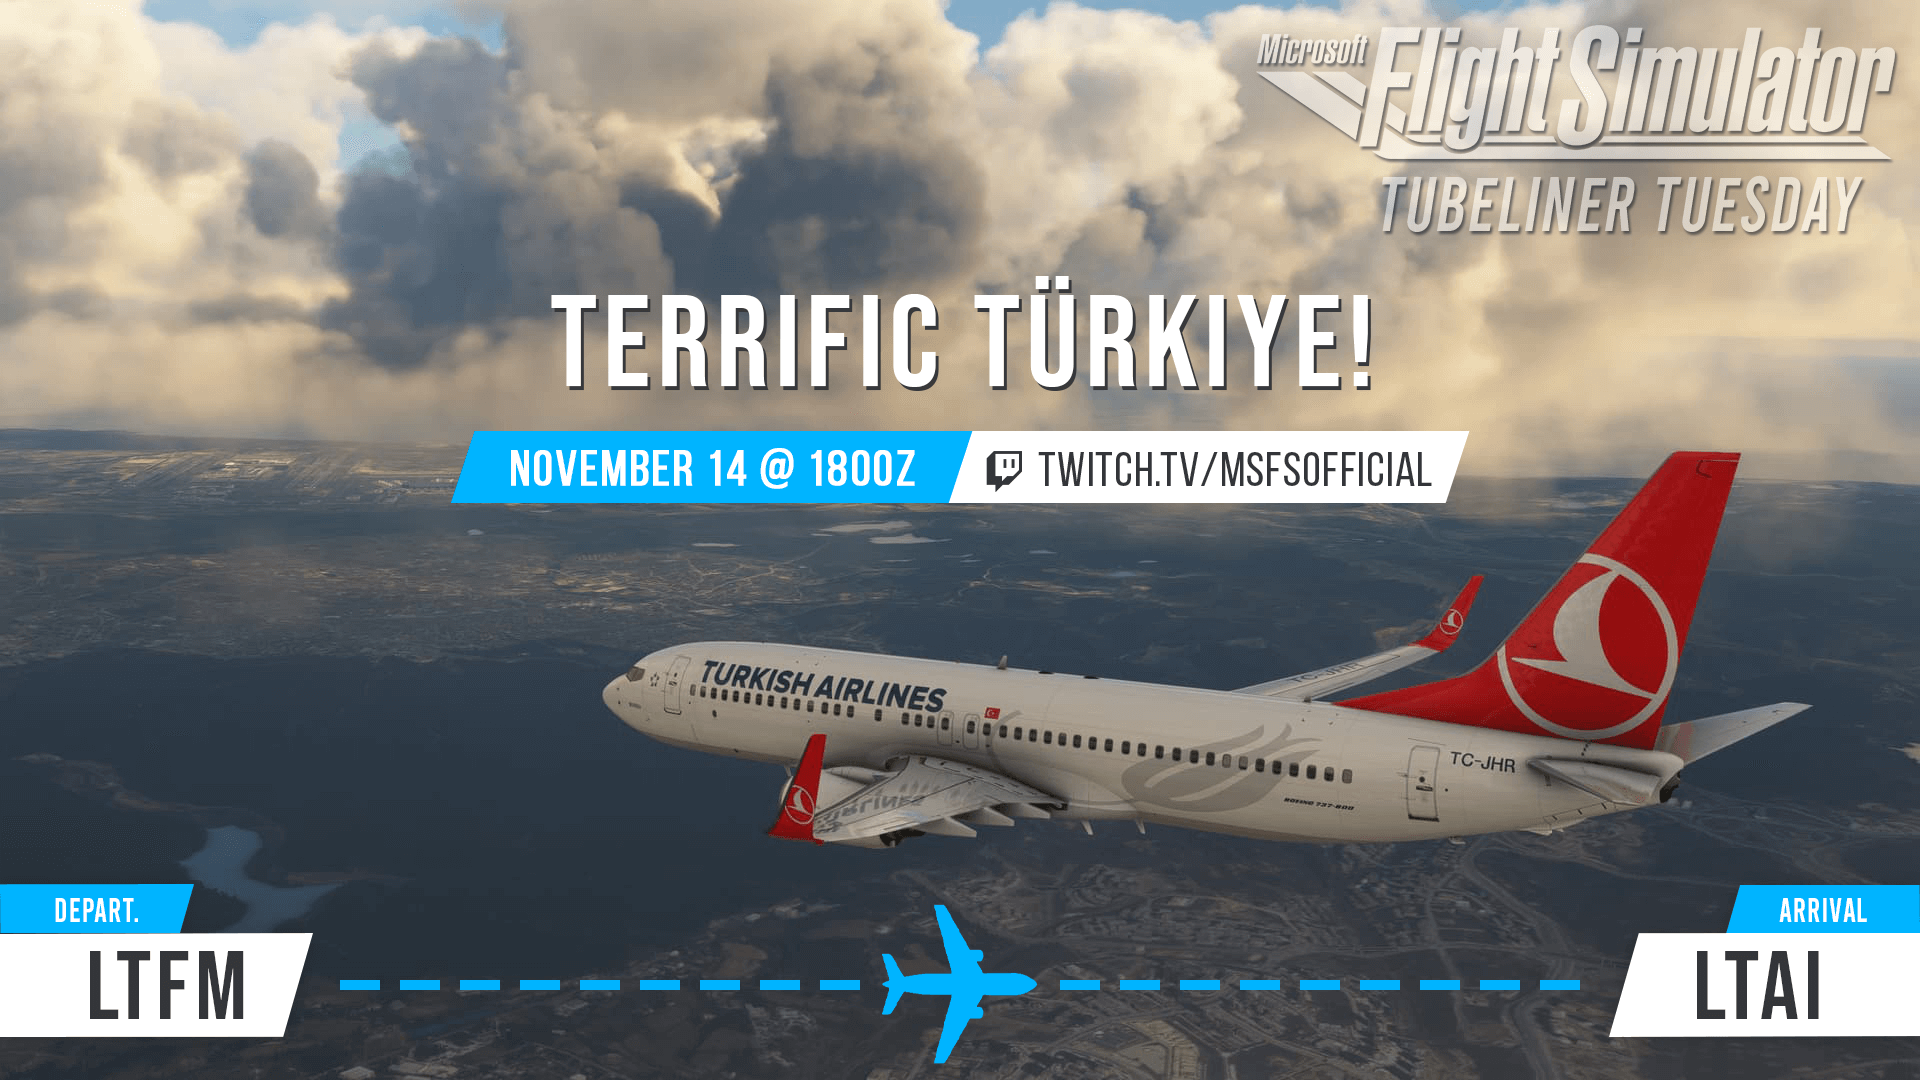 Tubeliner Tuesday: Terrific Turkiye. Tuesday, November 14 at 1800 UTC. twitch.tv/msfsofficial